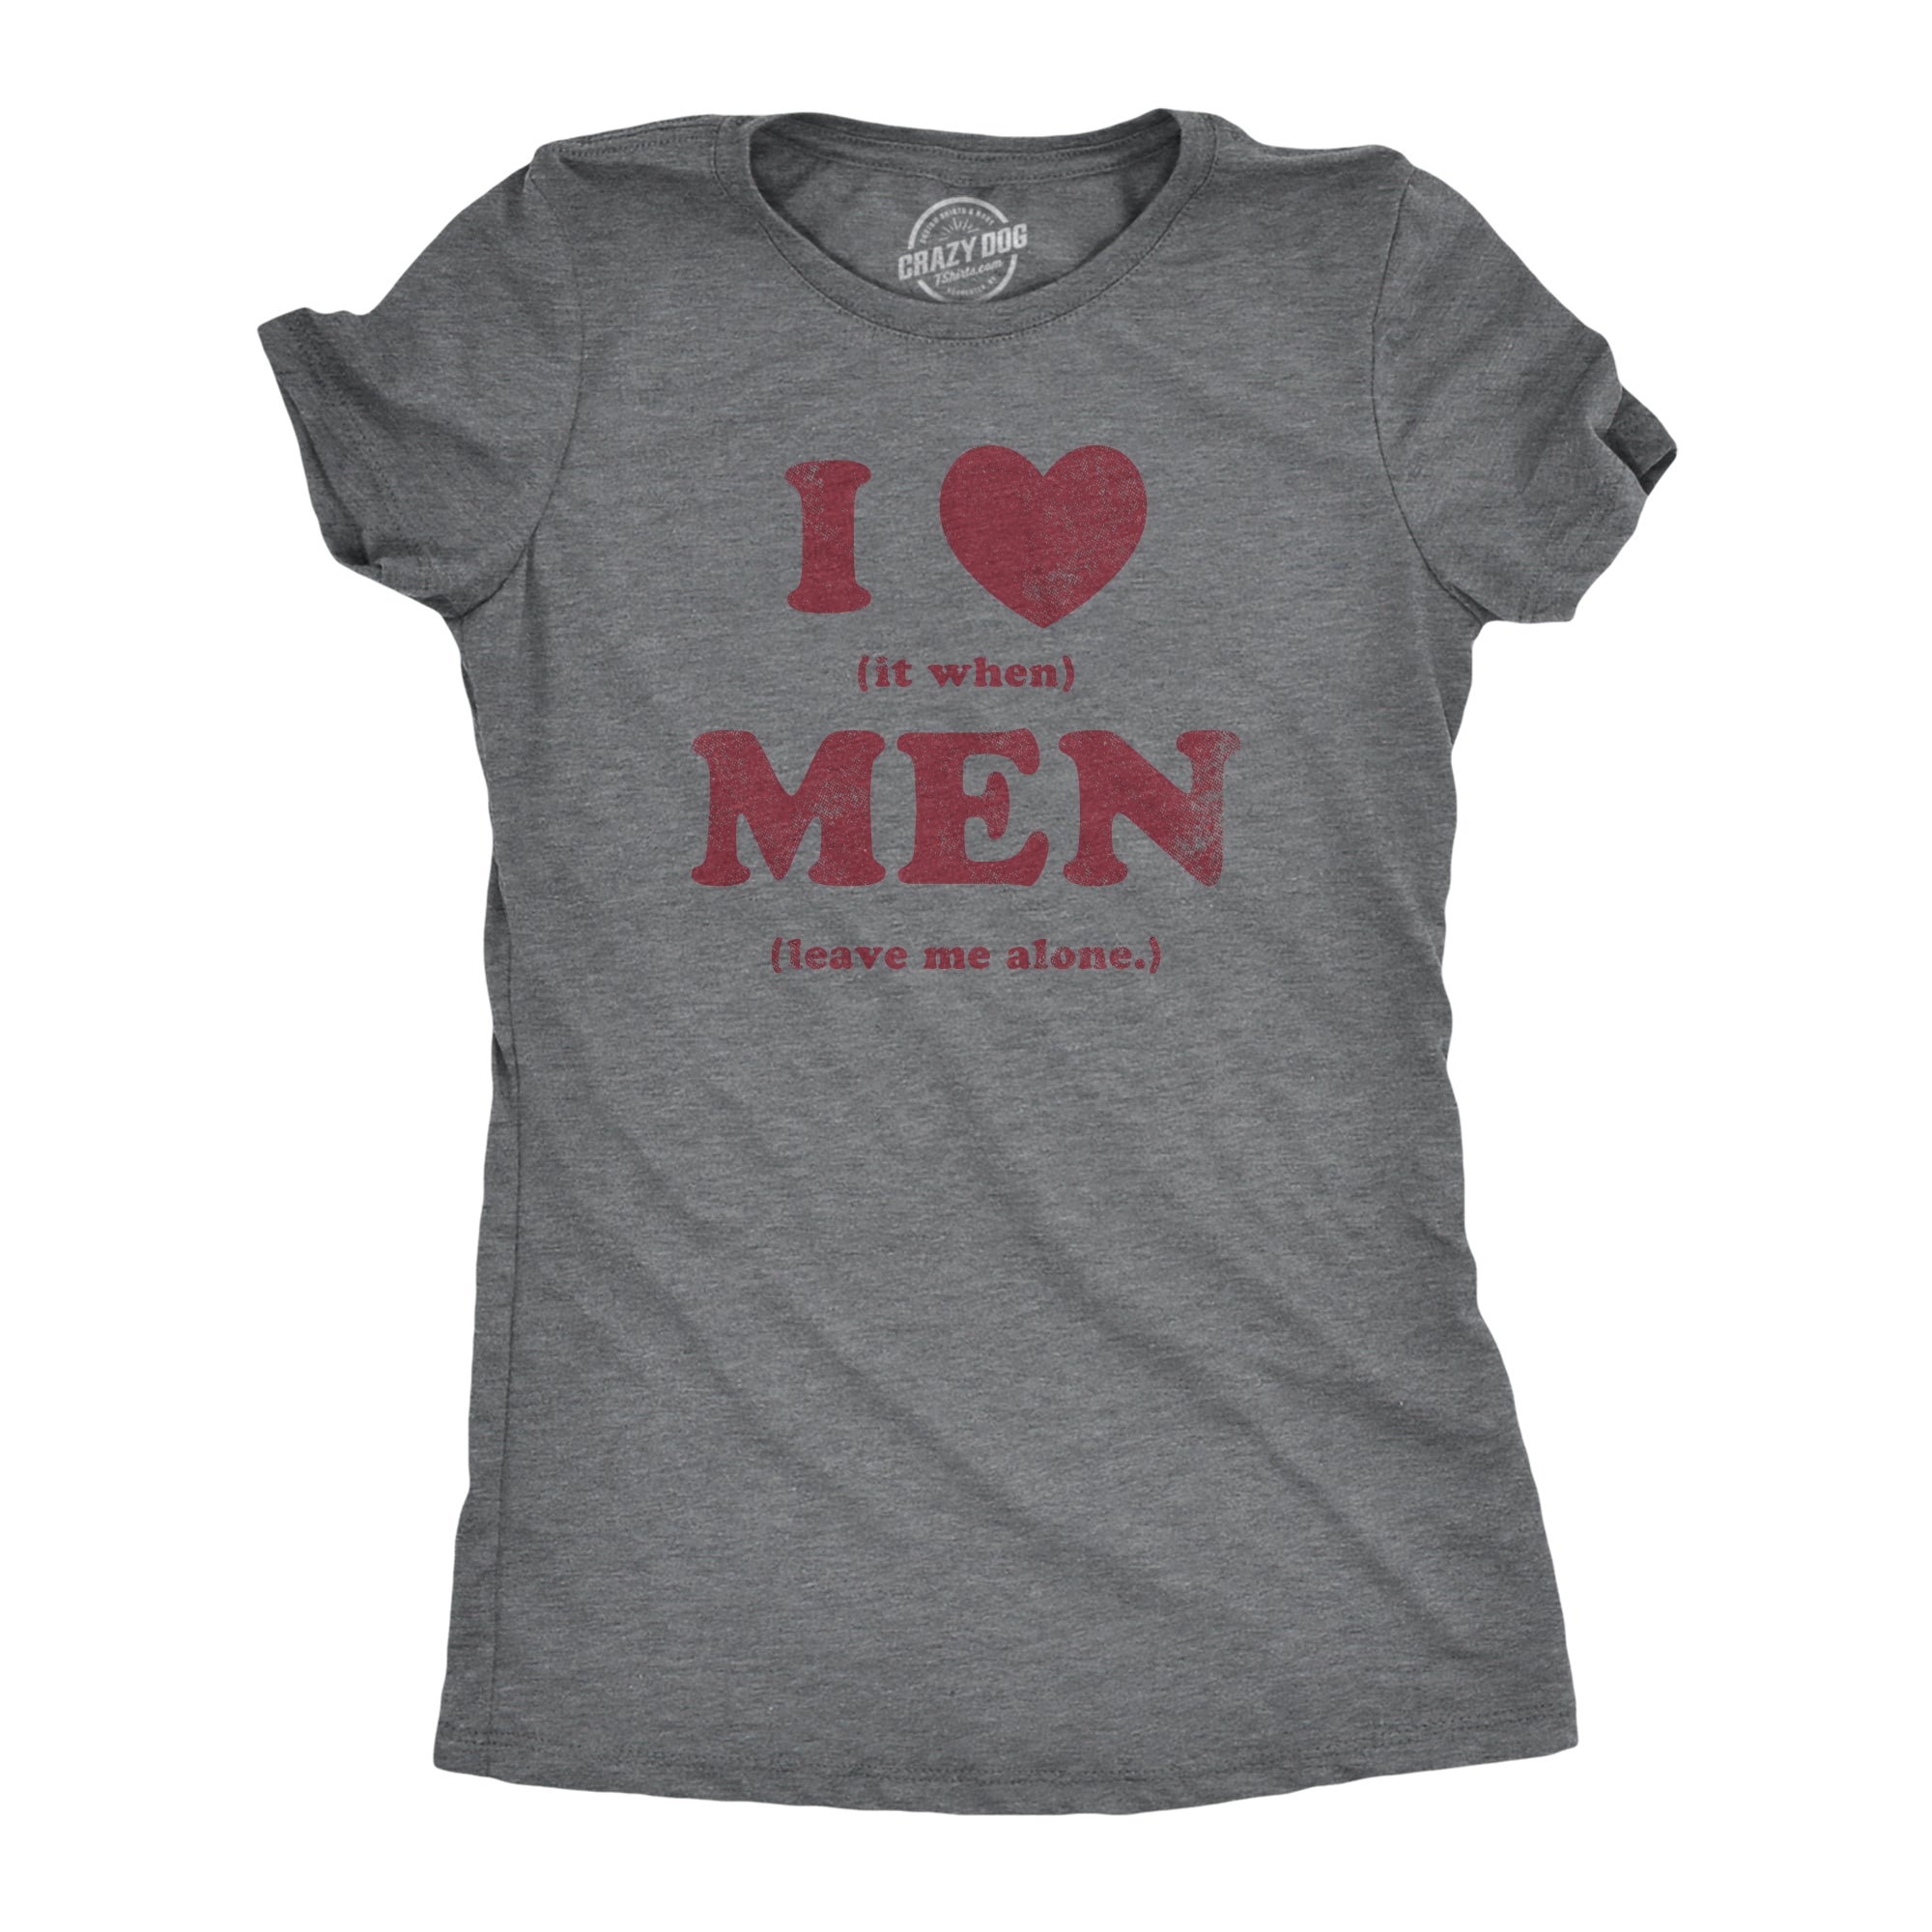 Funny Dark Heather Grey - MEN I Heart It When Men Leave Me Alone Womens T Shirt Nerdy Sarcastic Tee